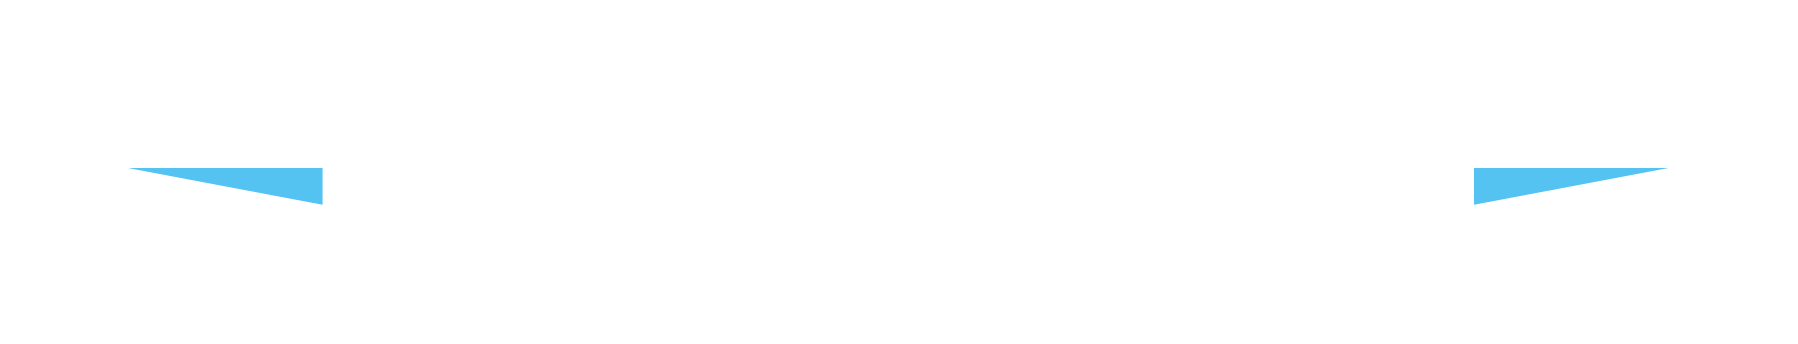 Youtube メンバーシップ会員特典